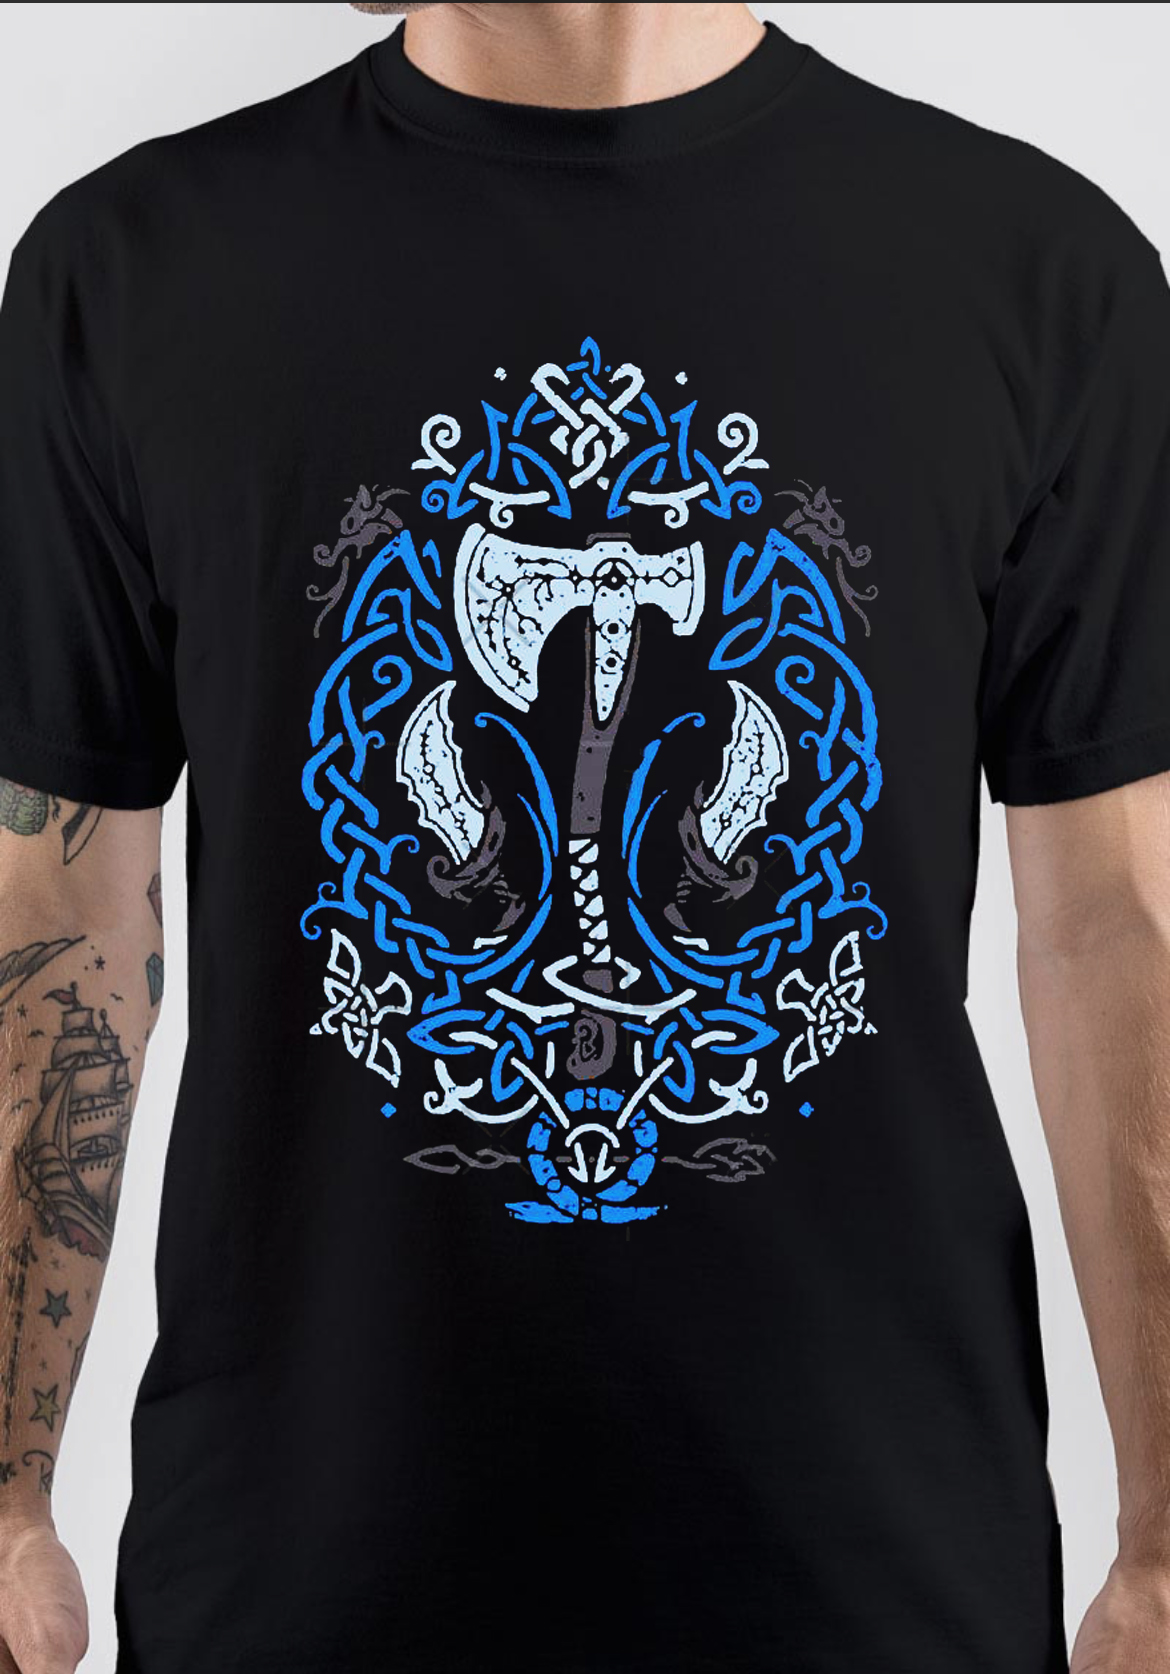 God Of War Ragnarok T-Shirt - Swag Shirts